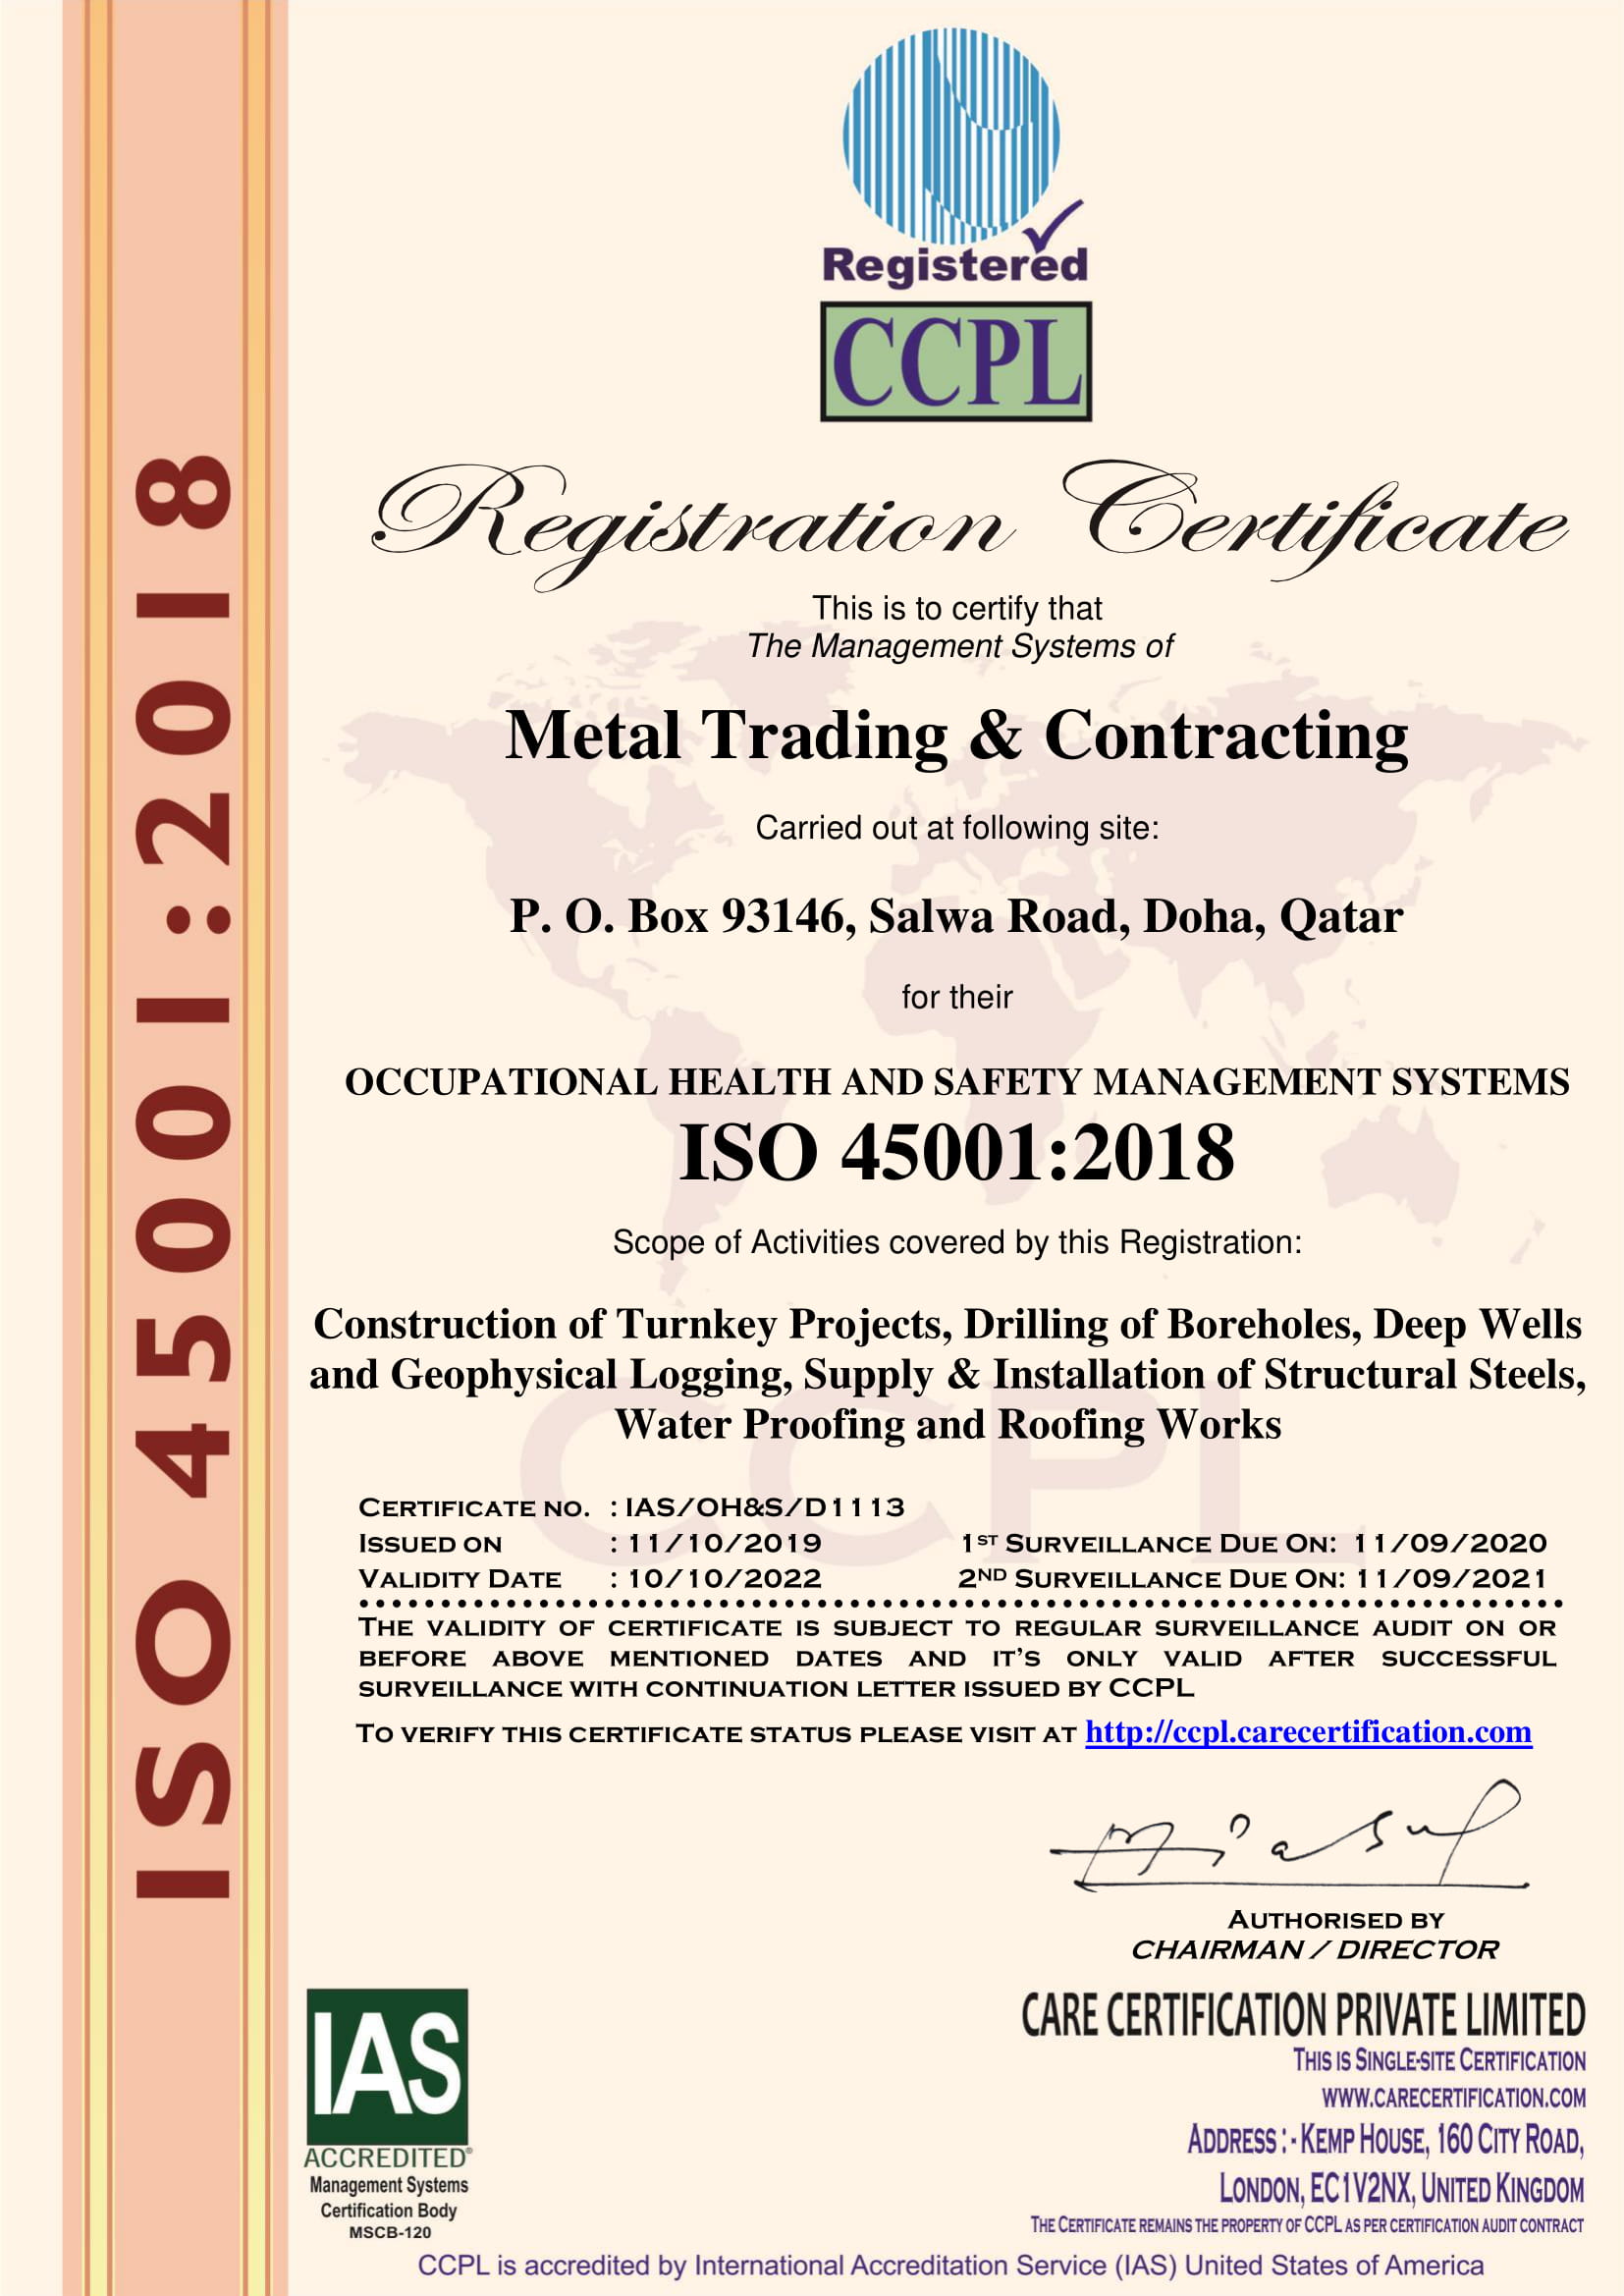 ISO Certification 45001-2018 - MTC